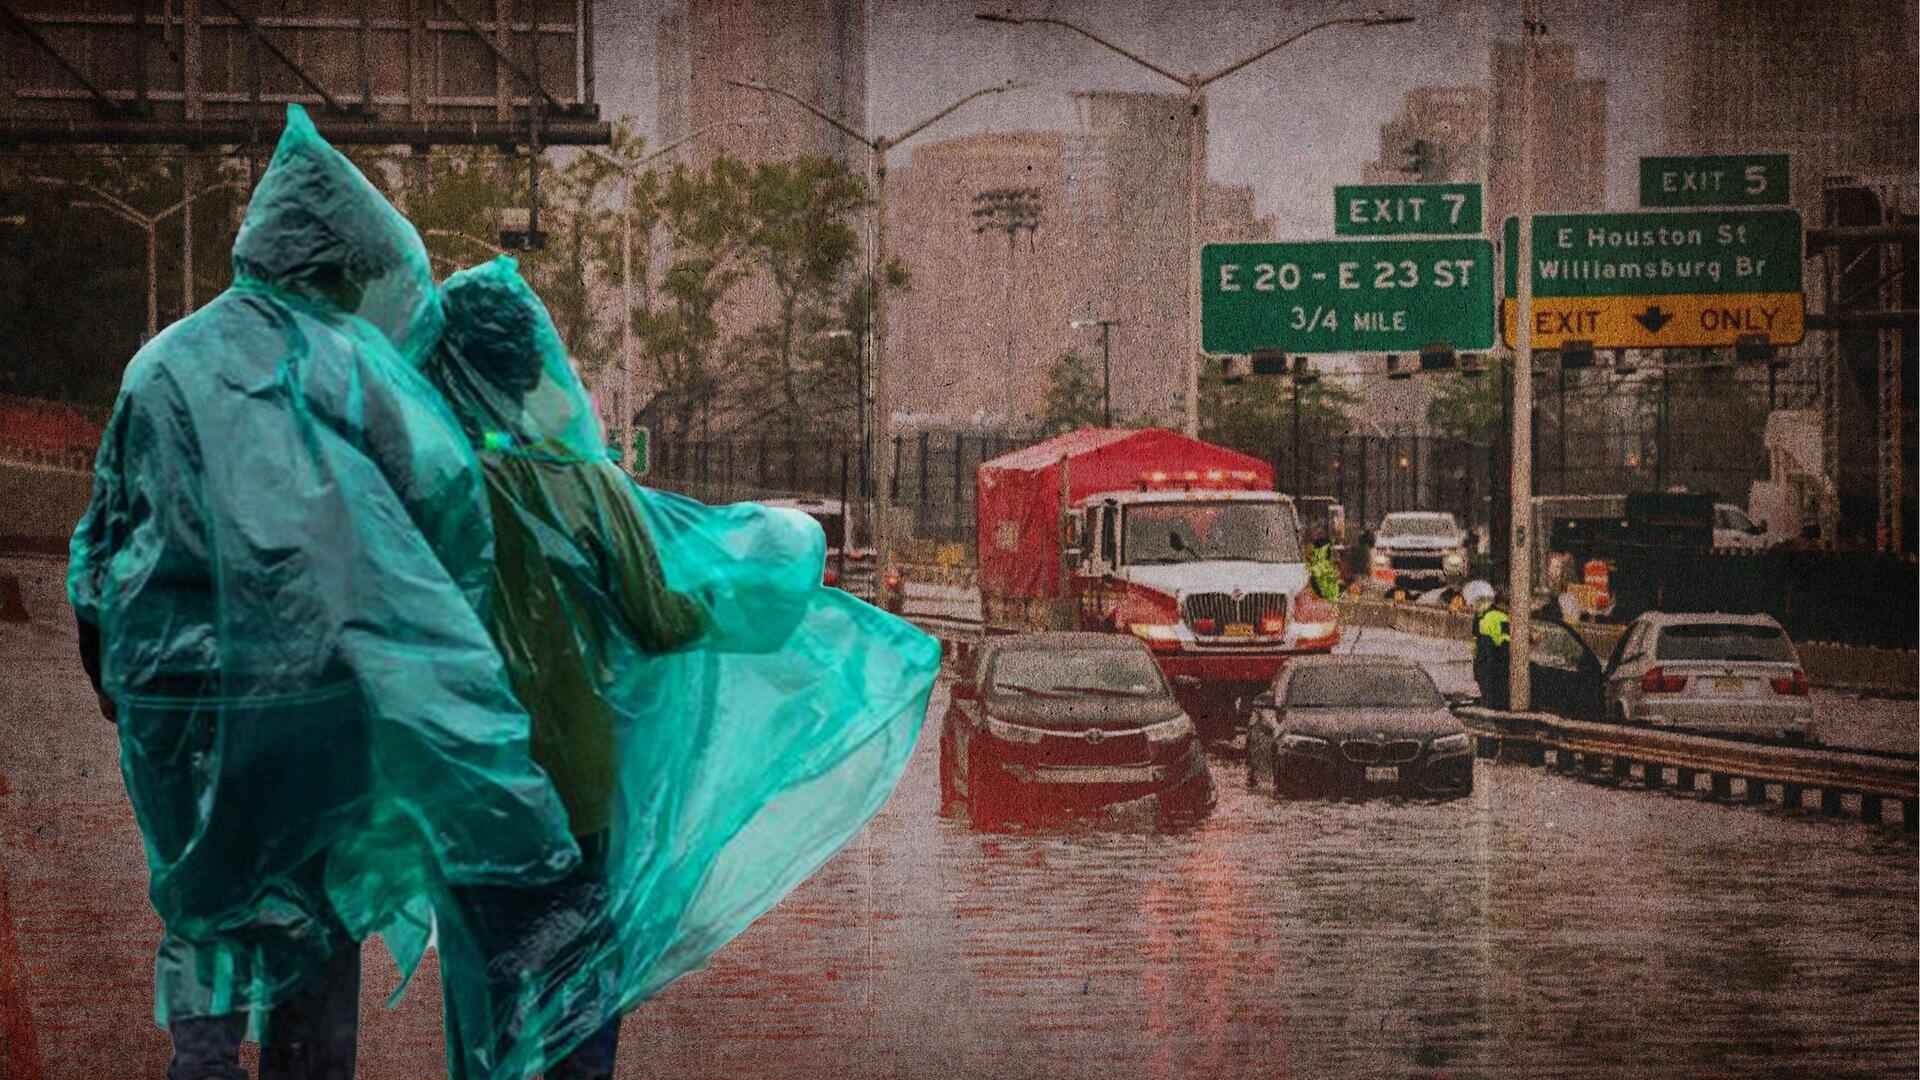 Heavy rain floods New York City, prompts airport delays, chaos